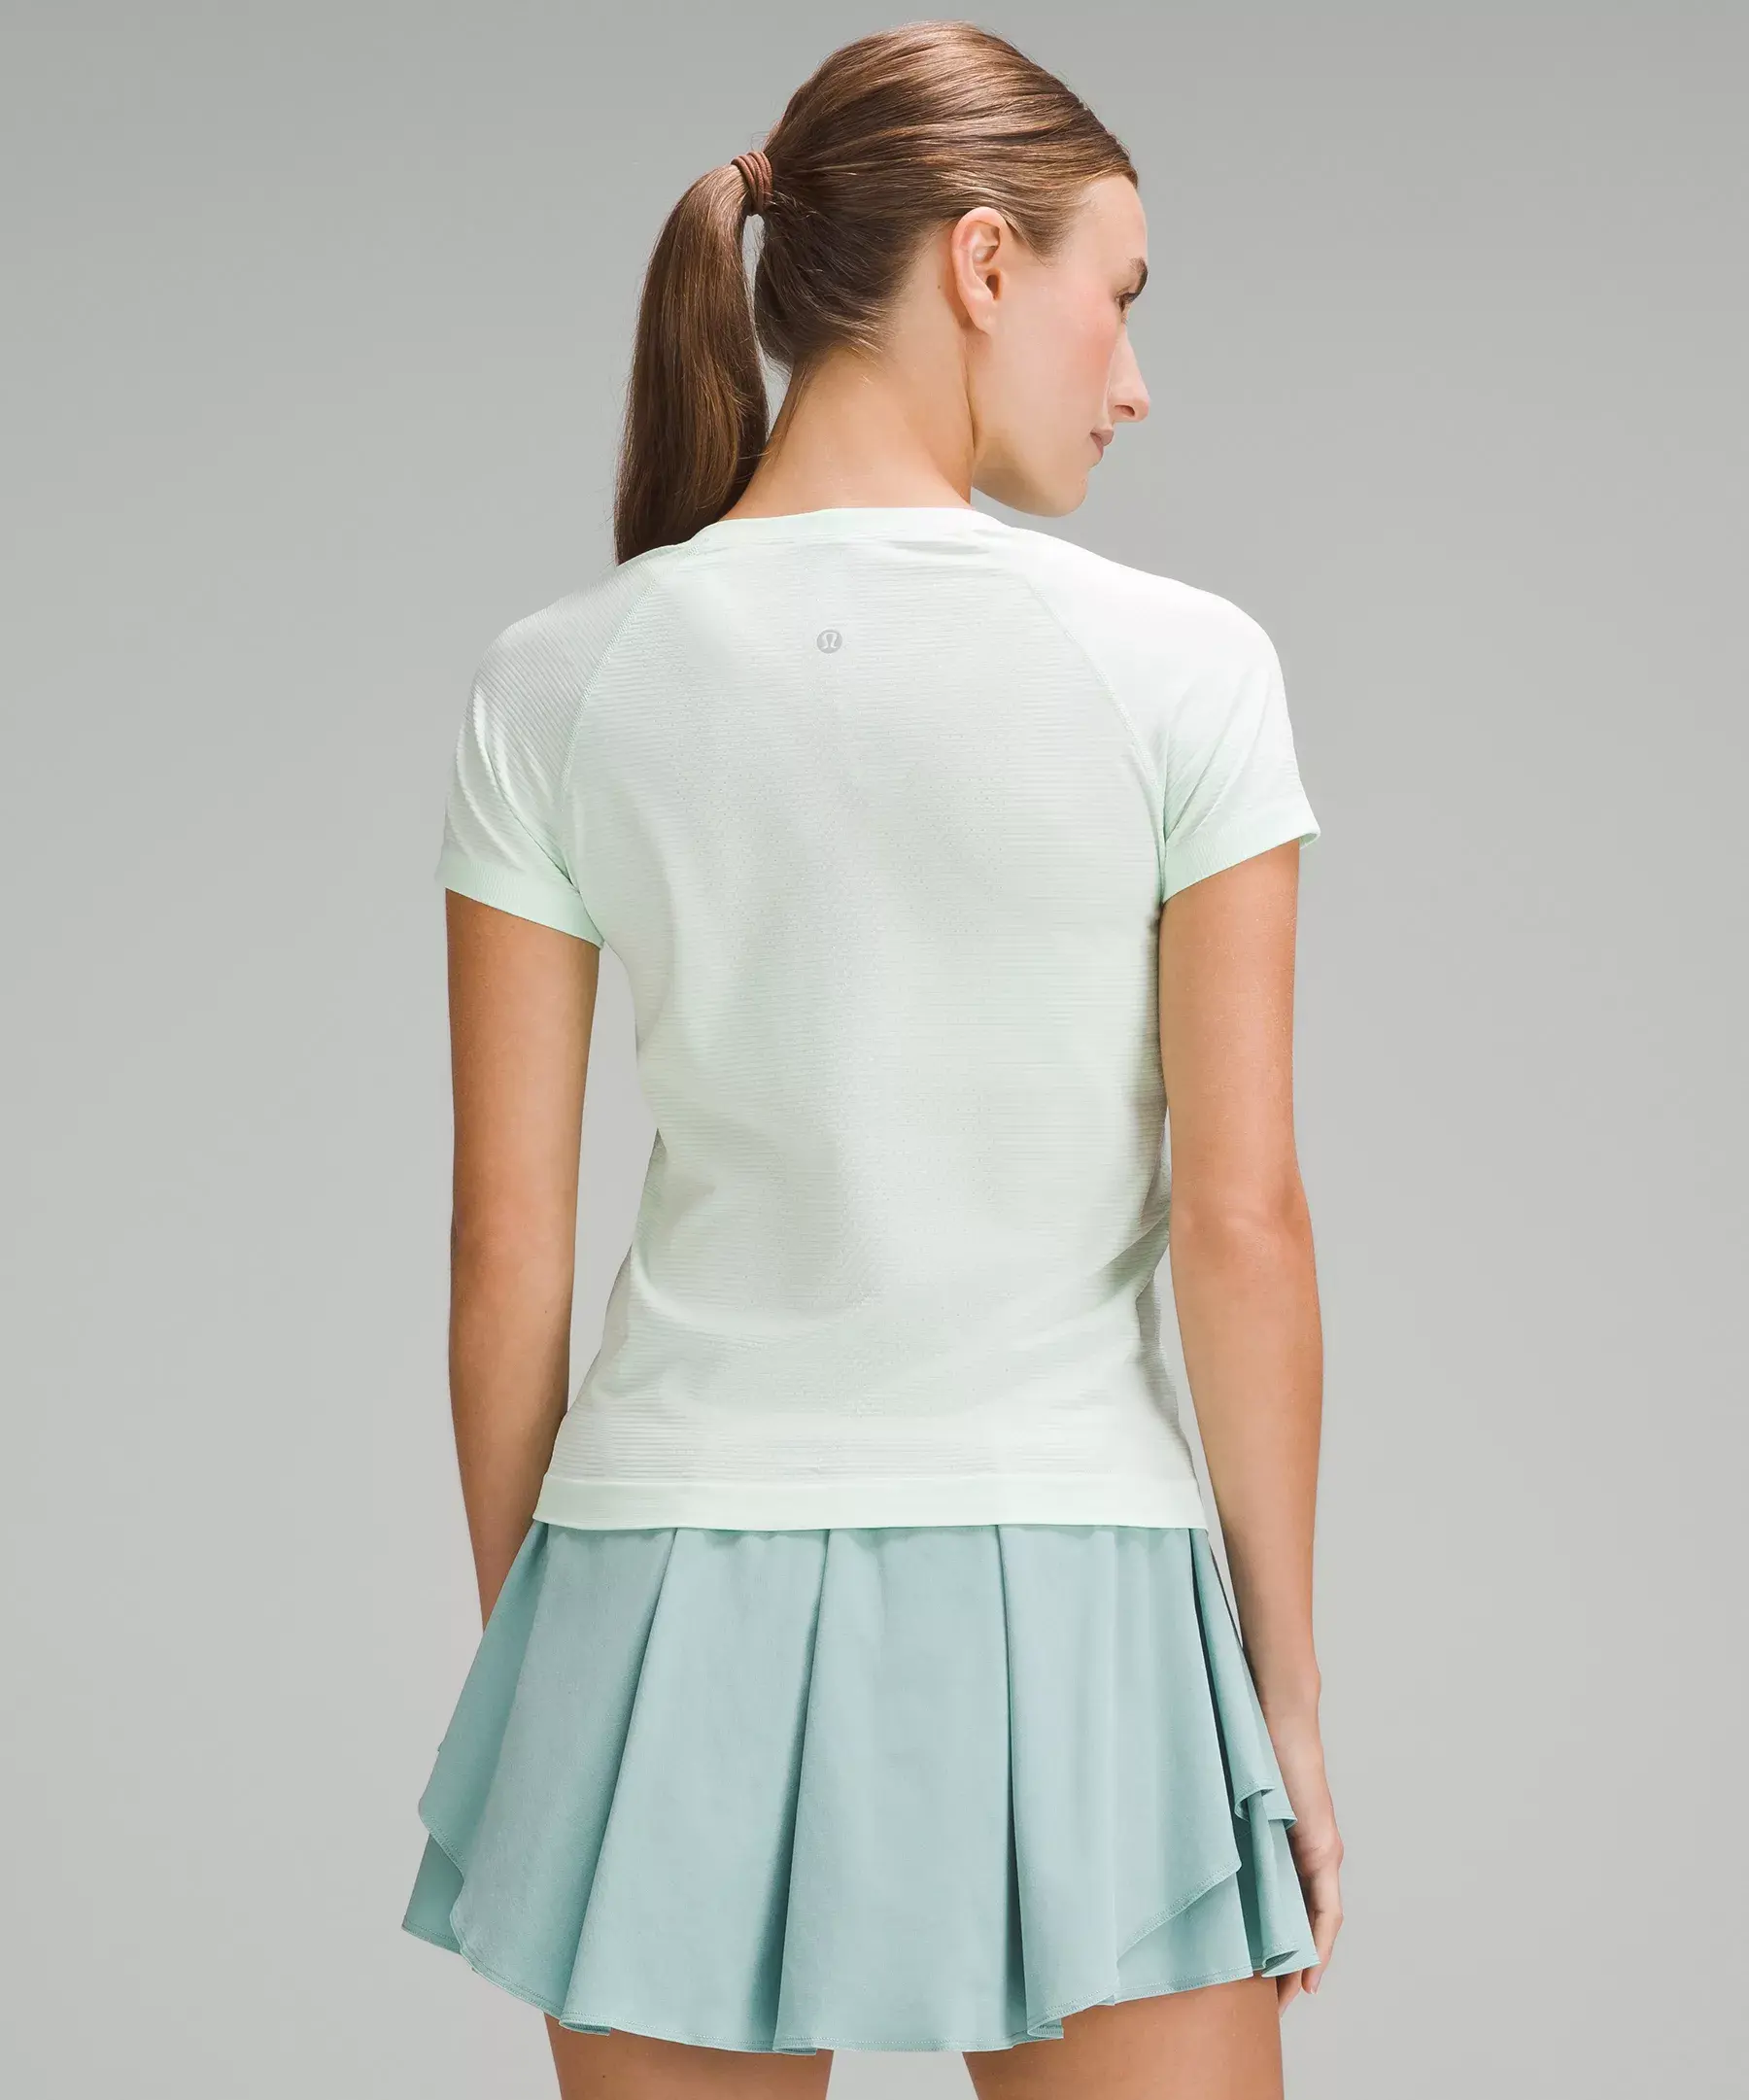 Lululemon Swiftly Tech Short-Sleeve Shirt 2.0 *Race Length. 3